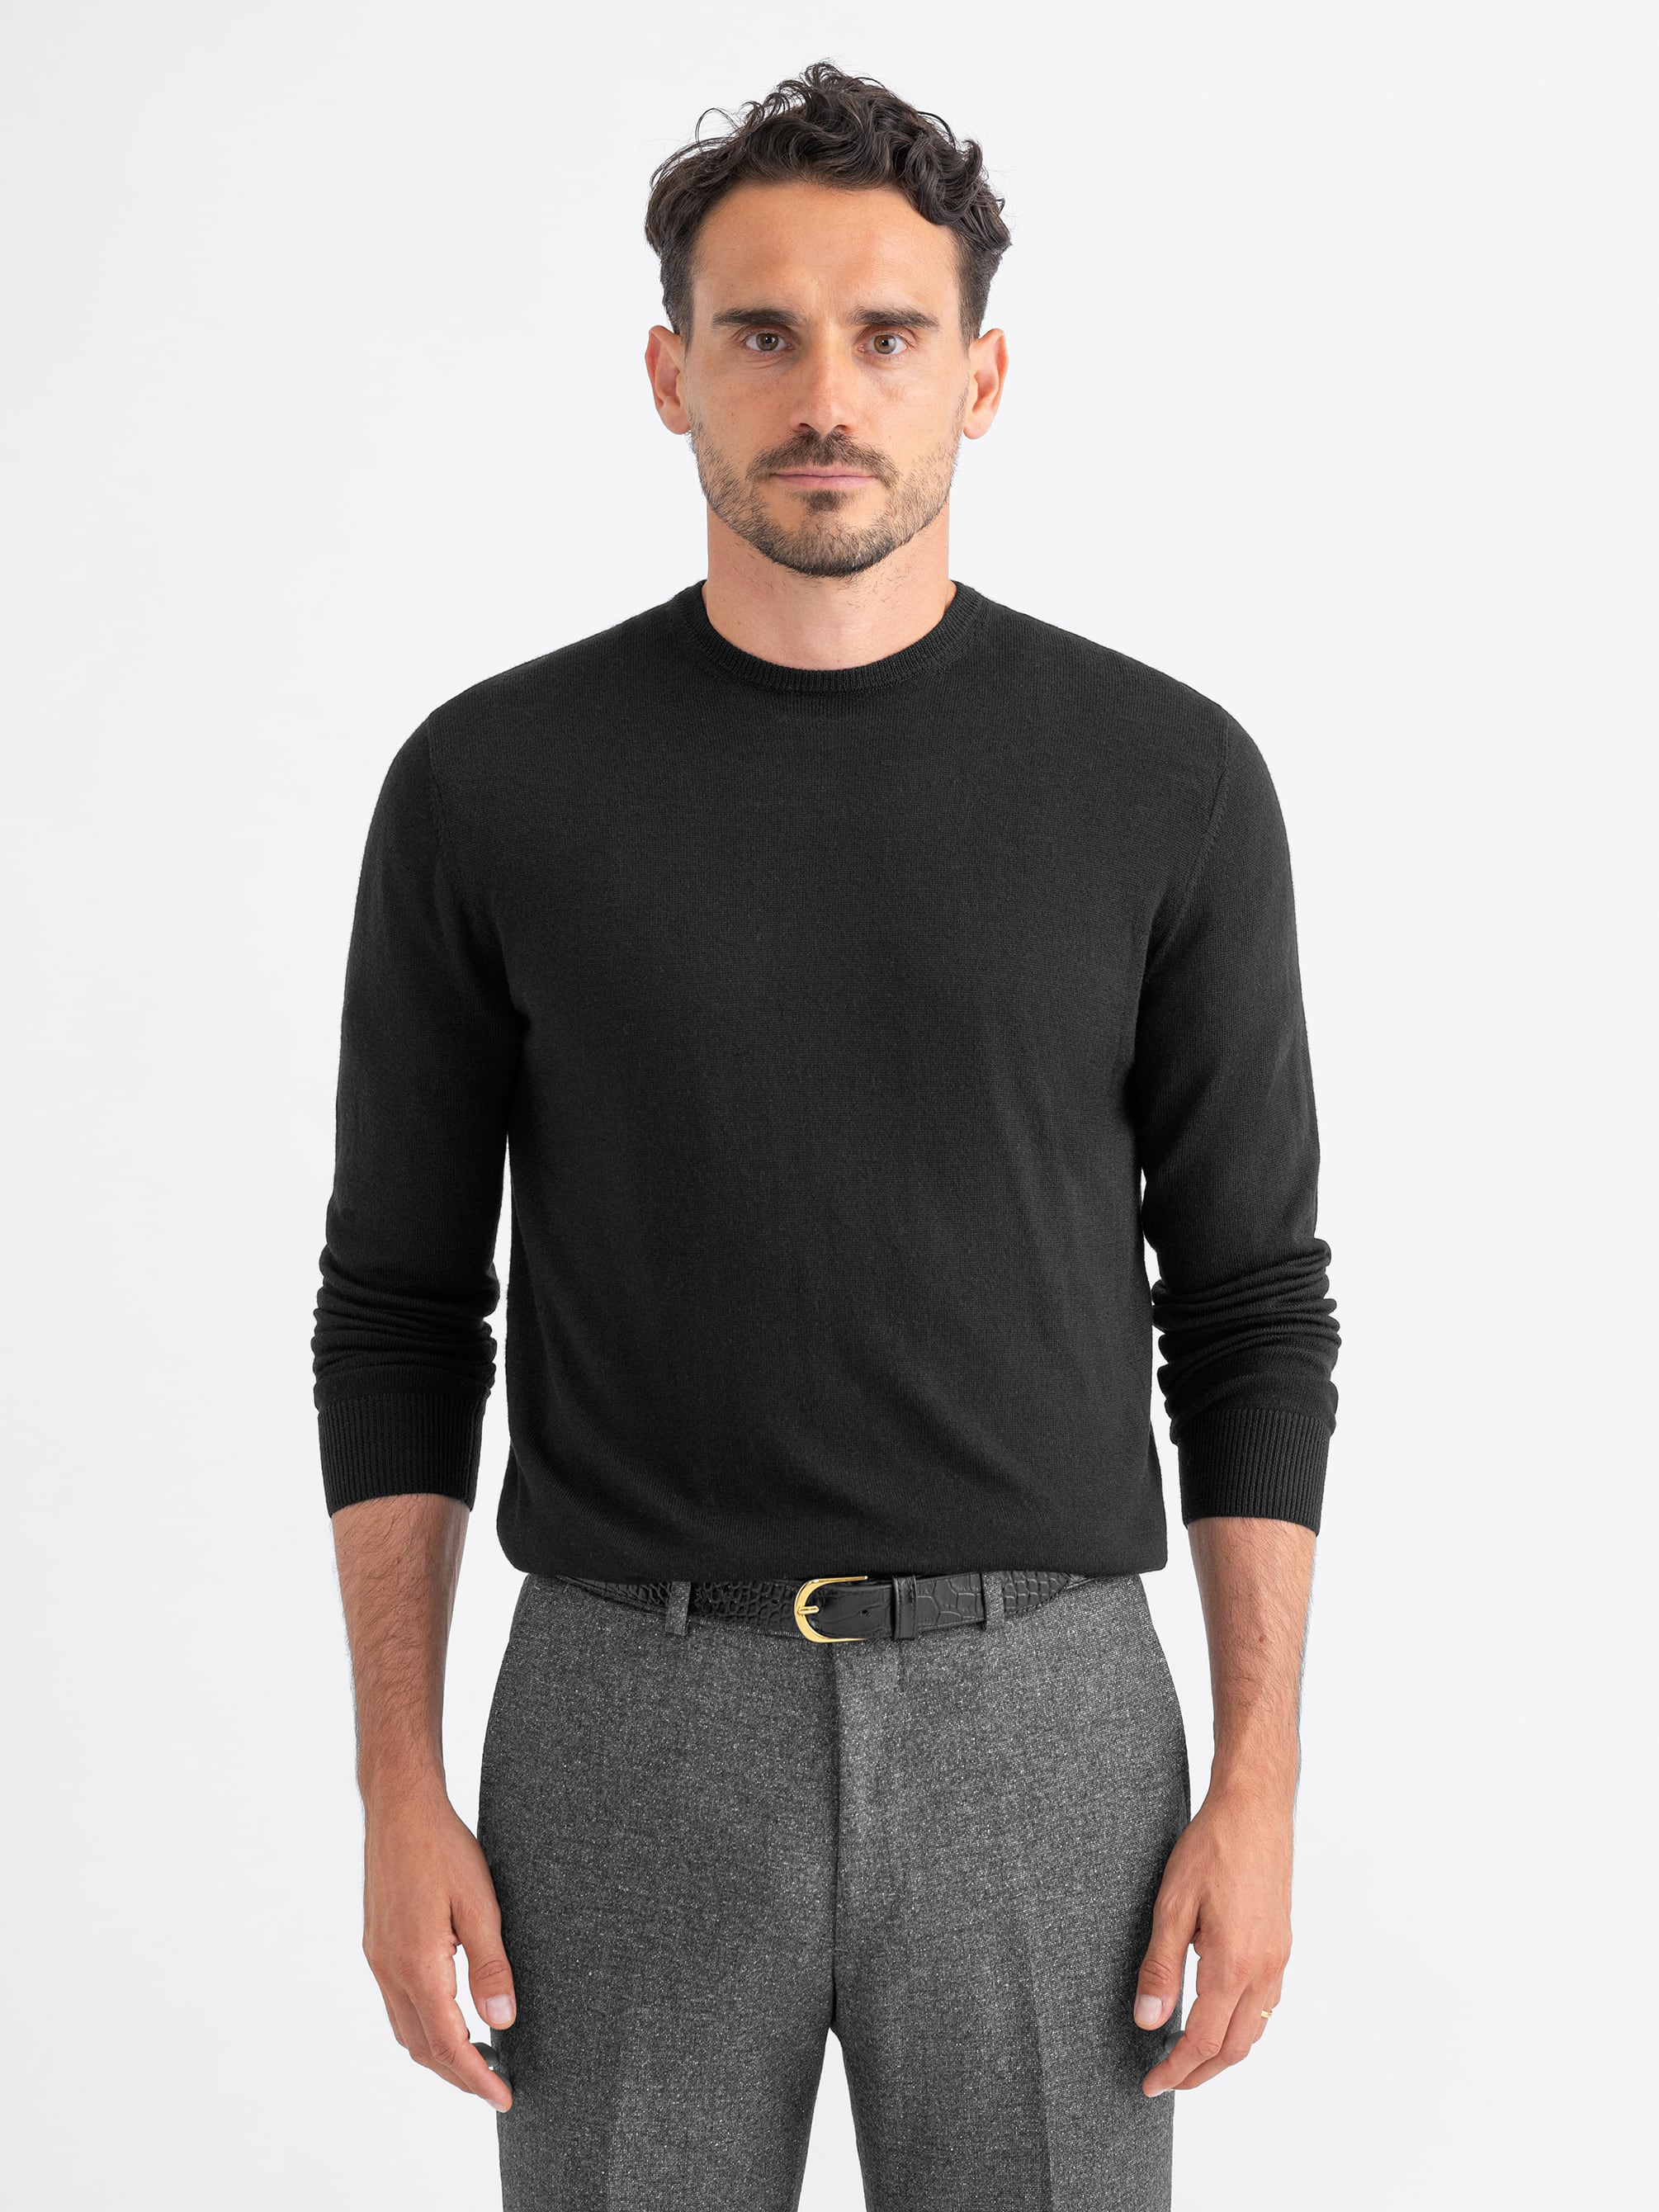 Black Cashmere Crewneck Sweater by Proper Cloth